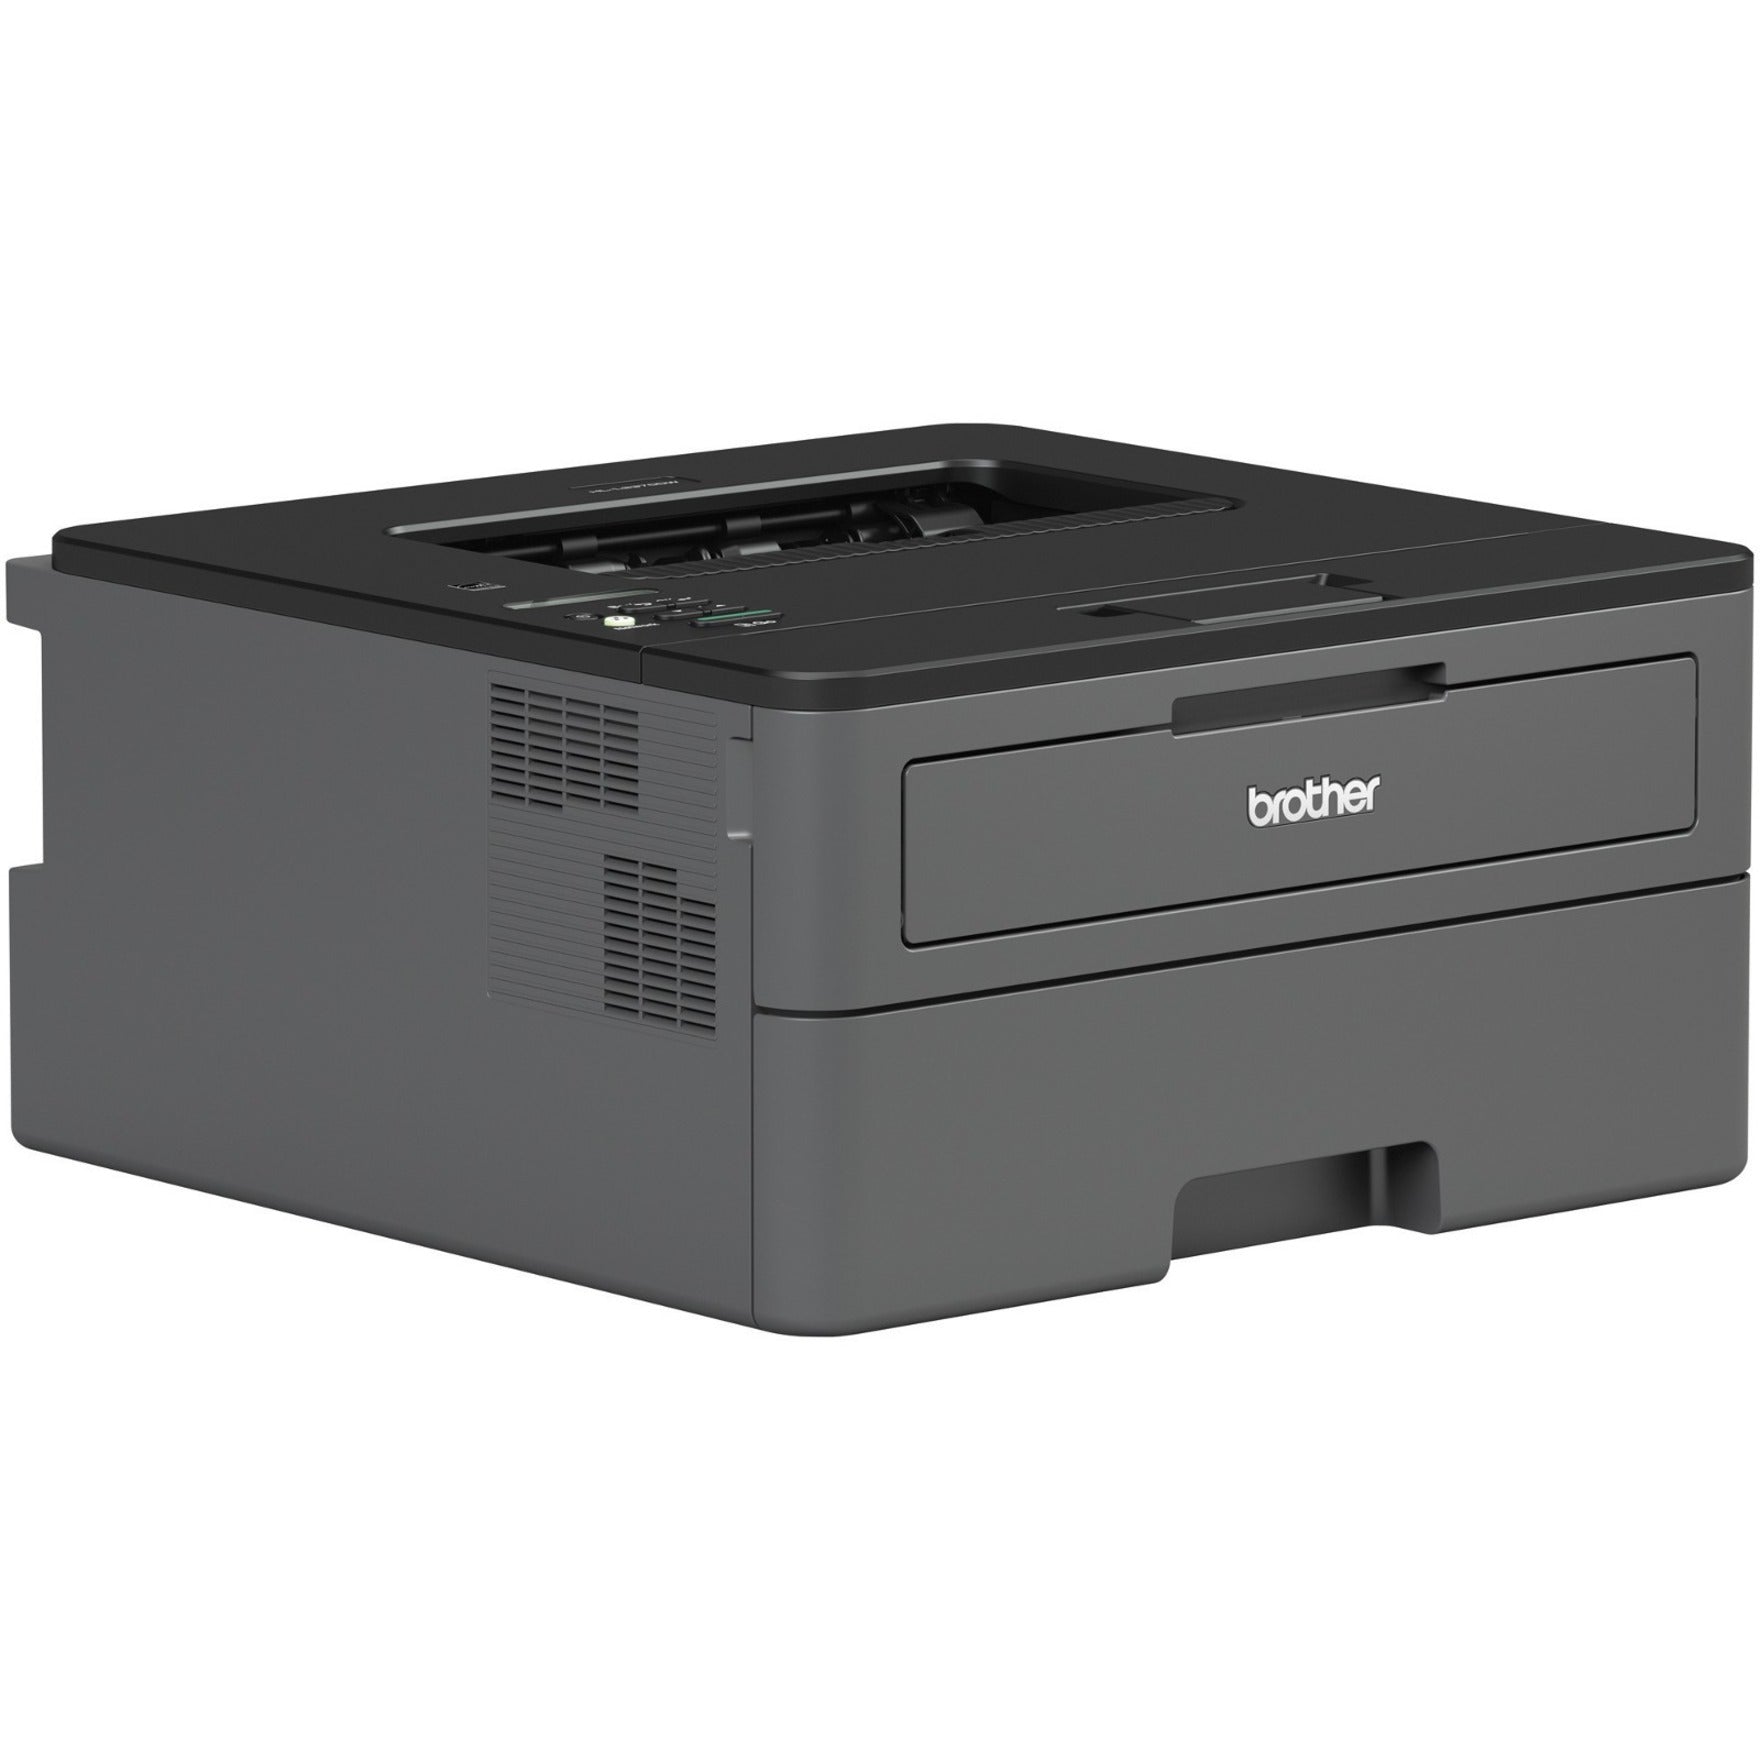 Brother RHL-L2370DW HL-L2370DW Compact Laser Printer - Good-as-New, Monochrome, Automatic Duplex Printing, Wireless Print Technology, 36 ppm, 2400 x 600 dpi